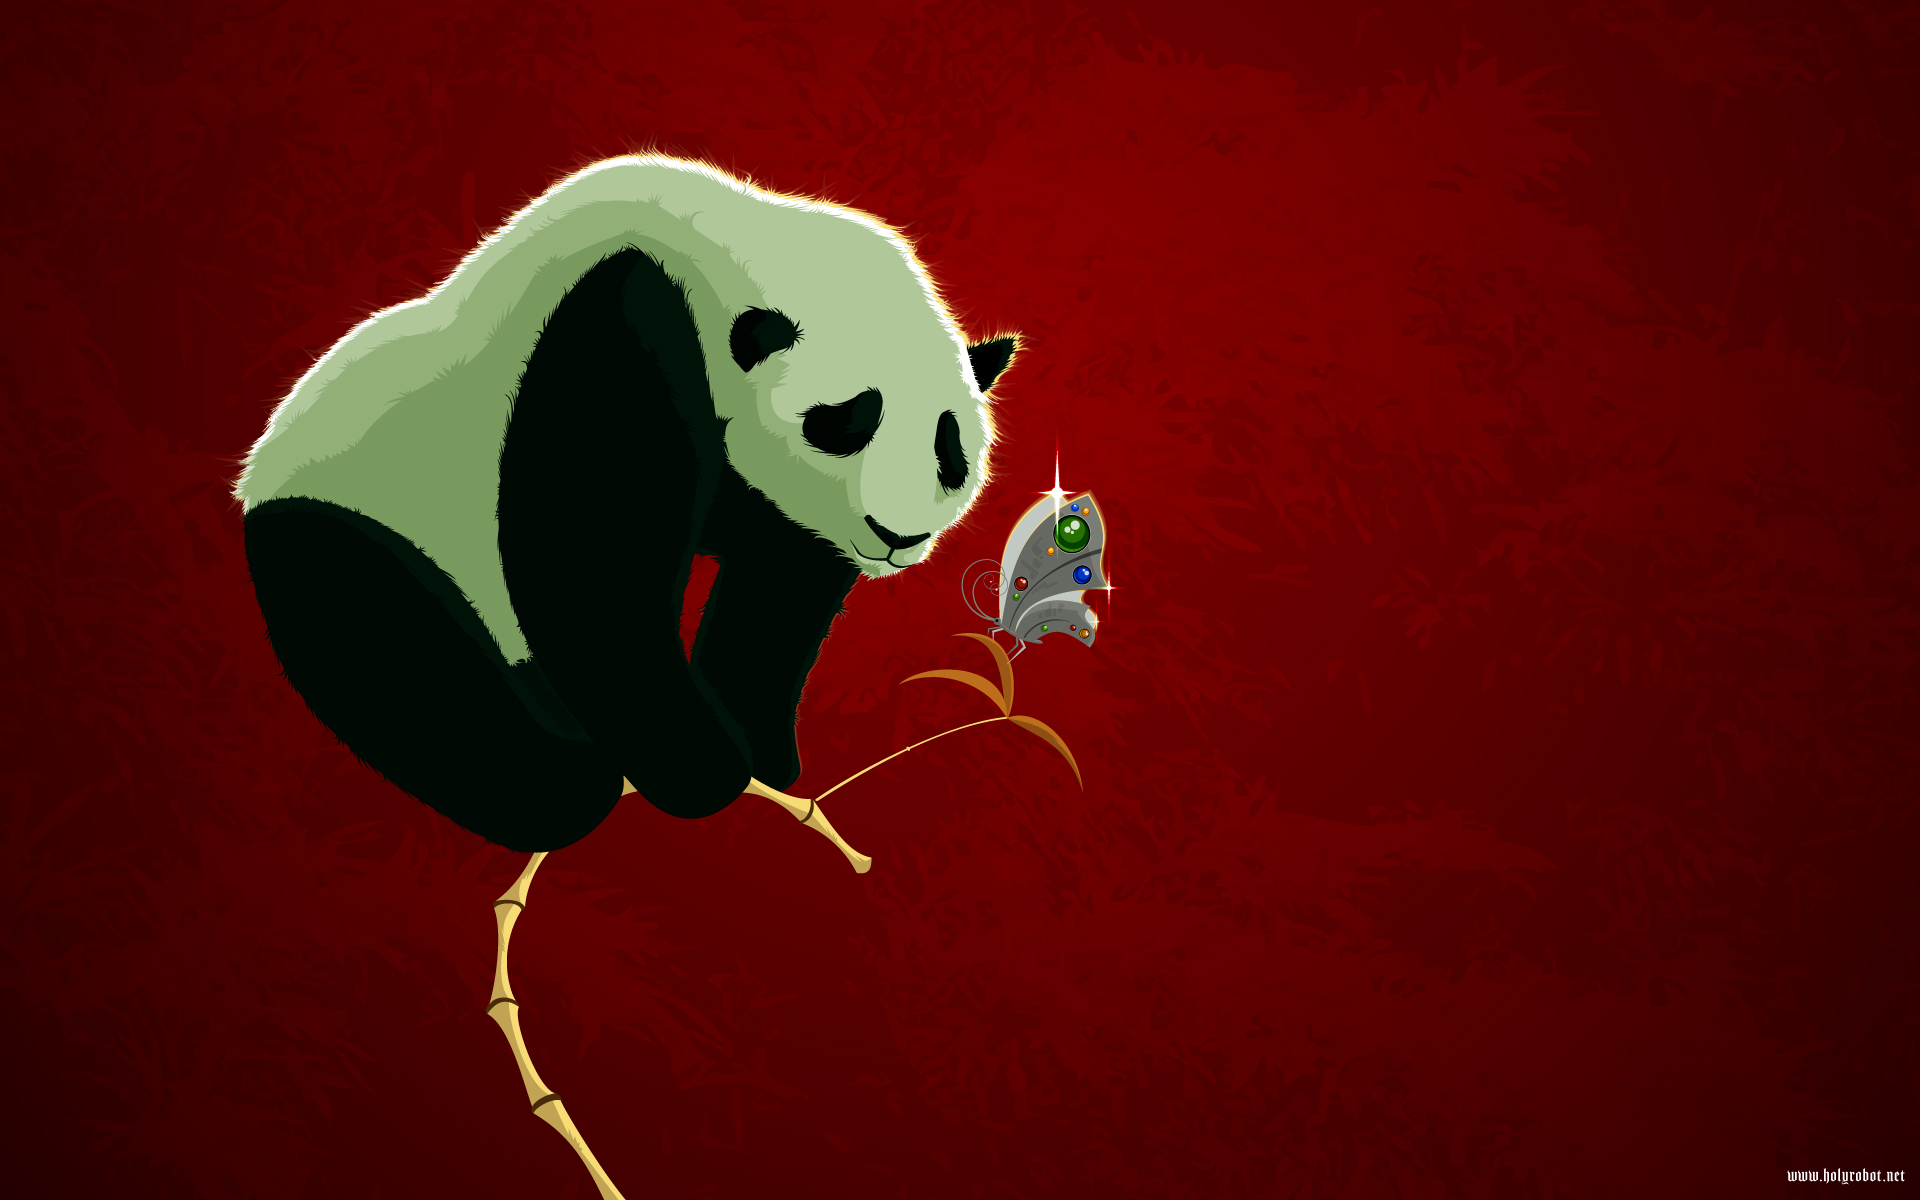 animals, panda bears, branches - desktop wallpaper